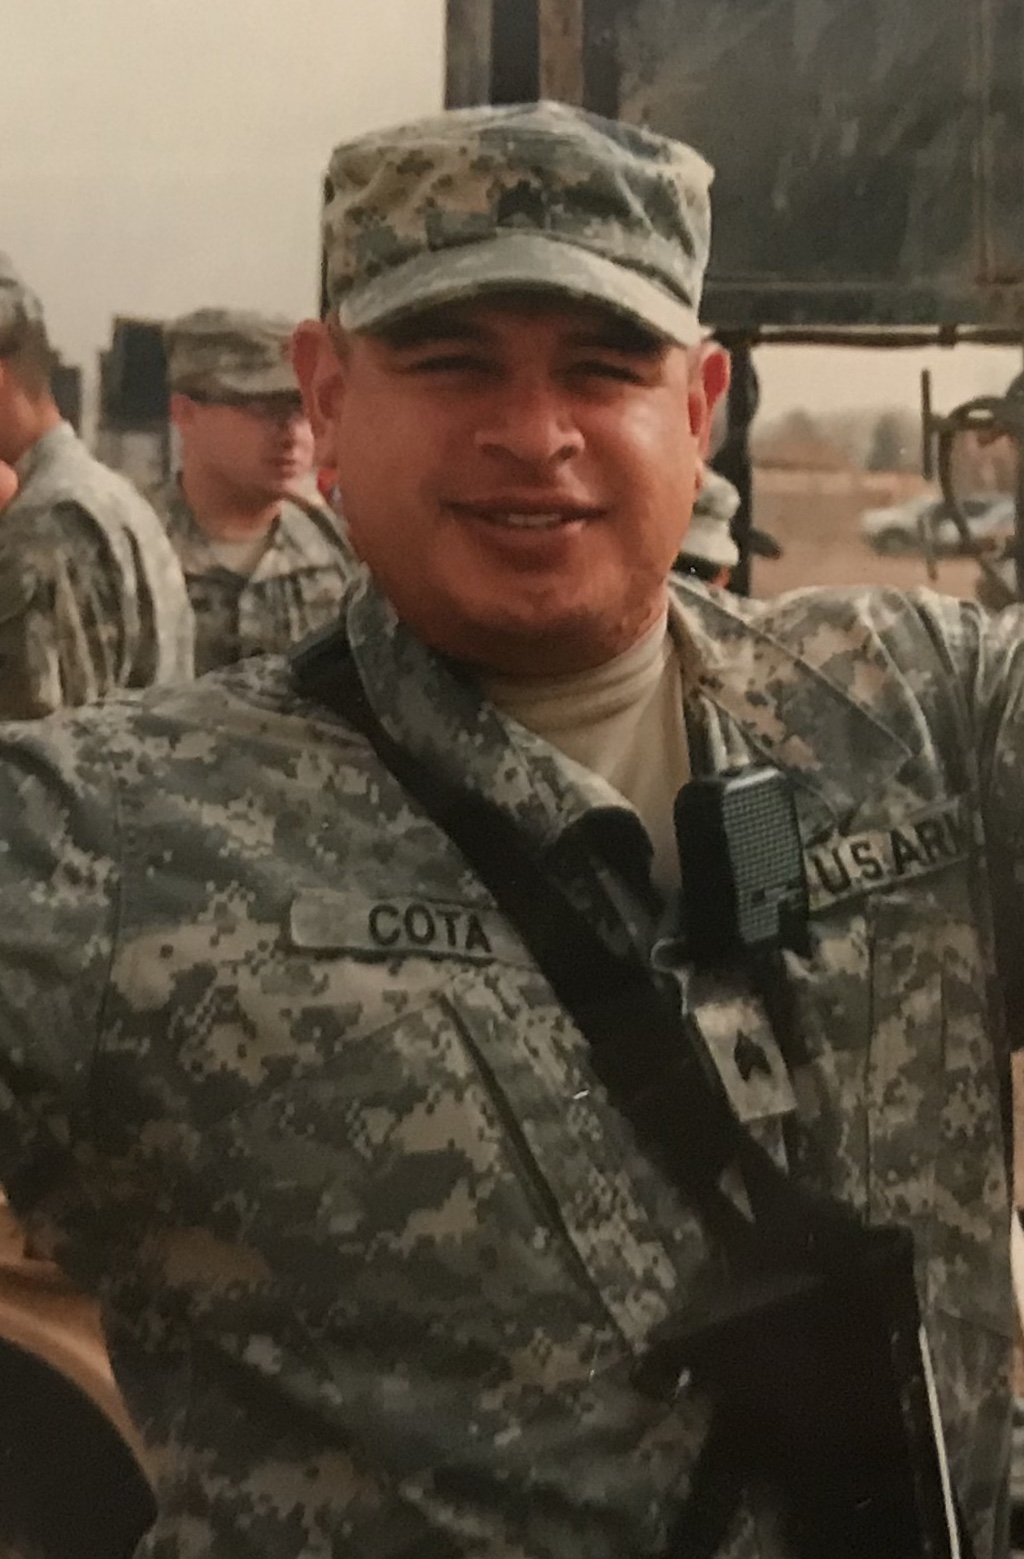 Victor Manuel Cota, SSG US ARMY